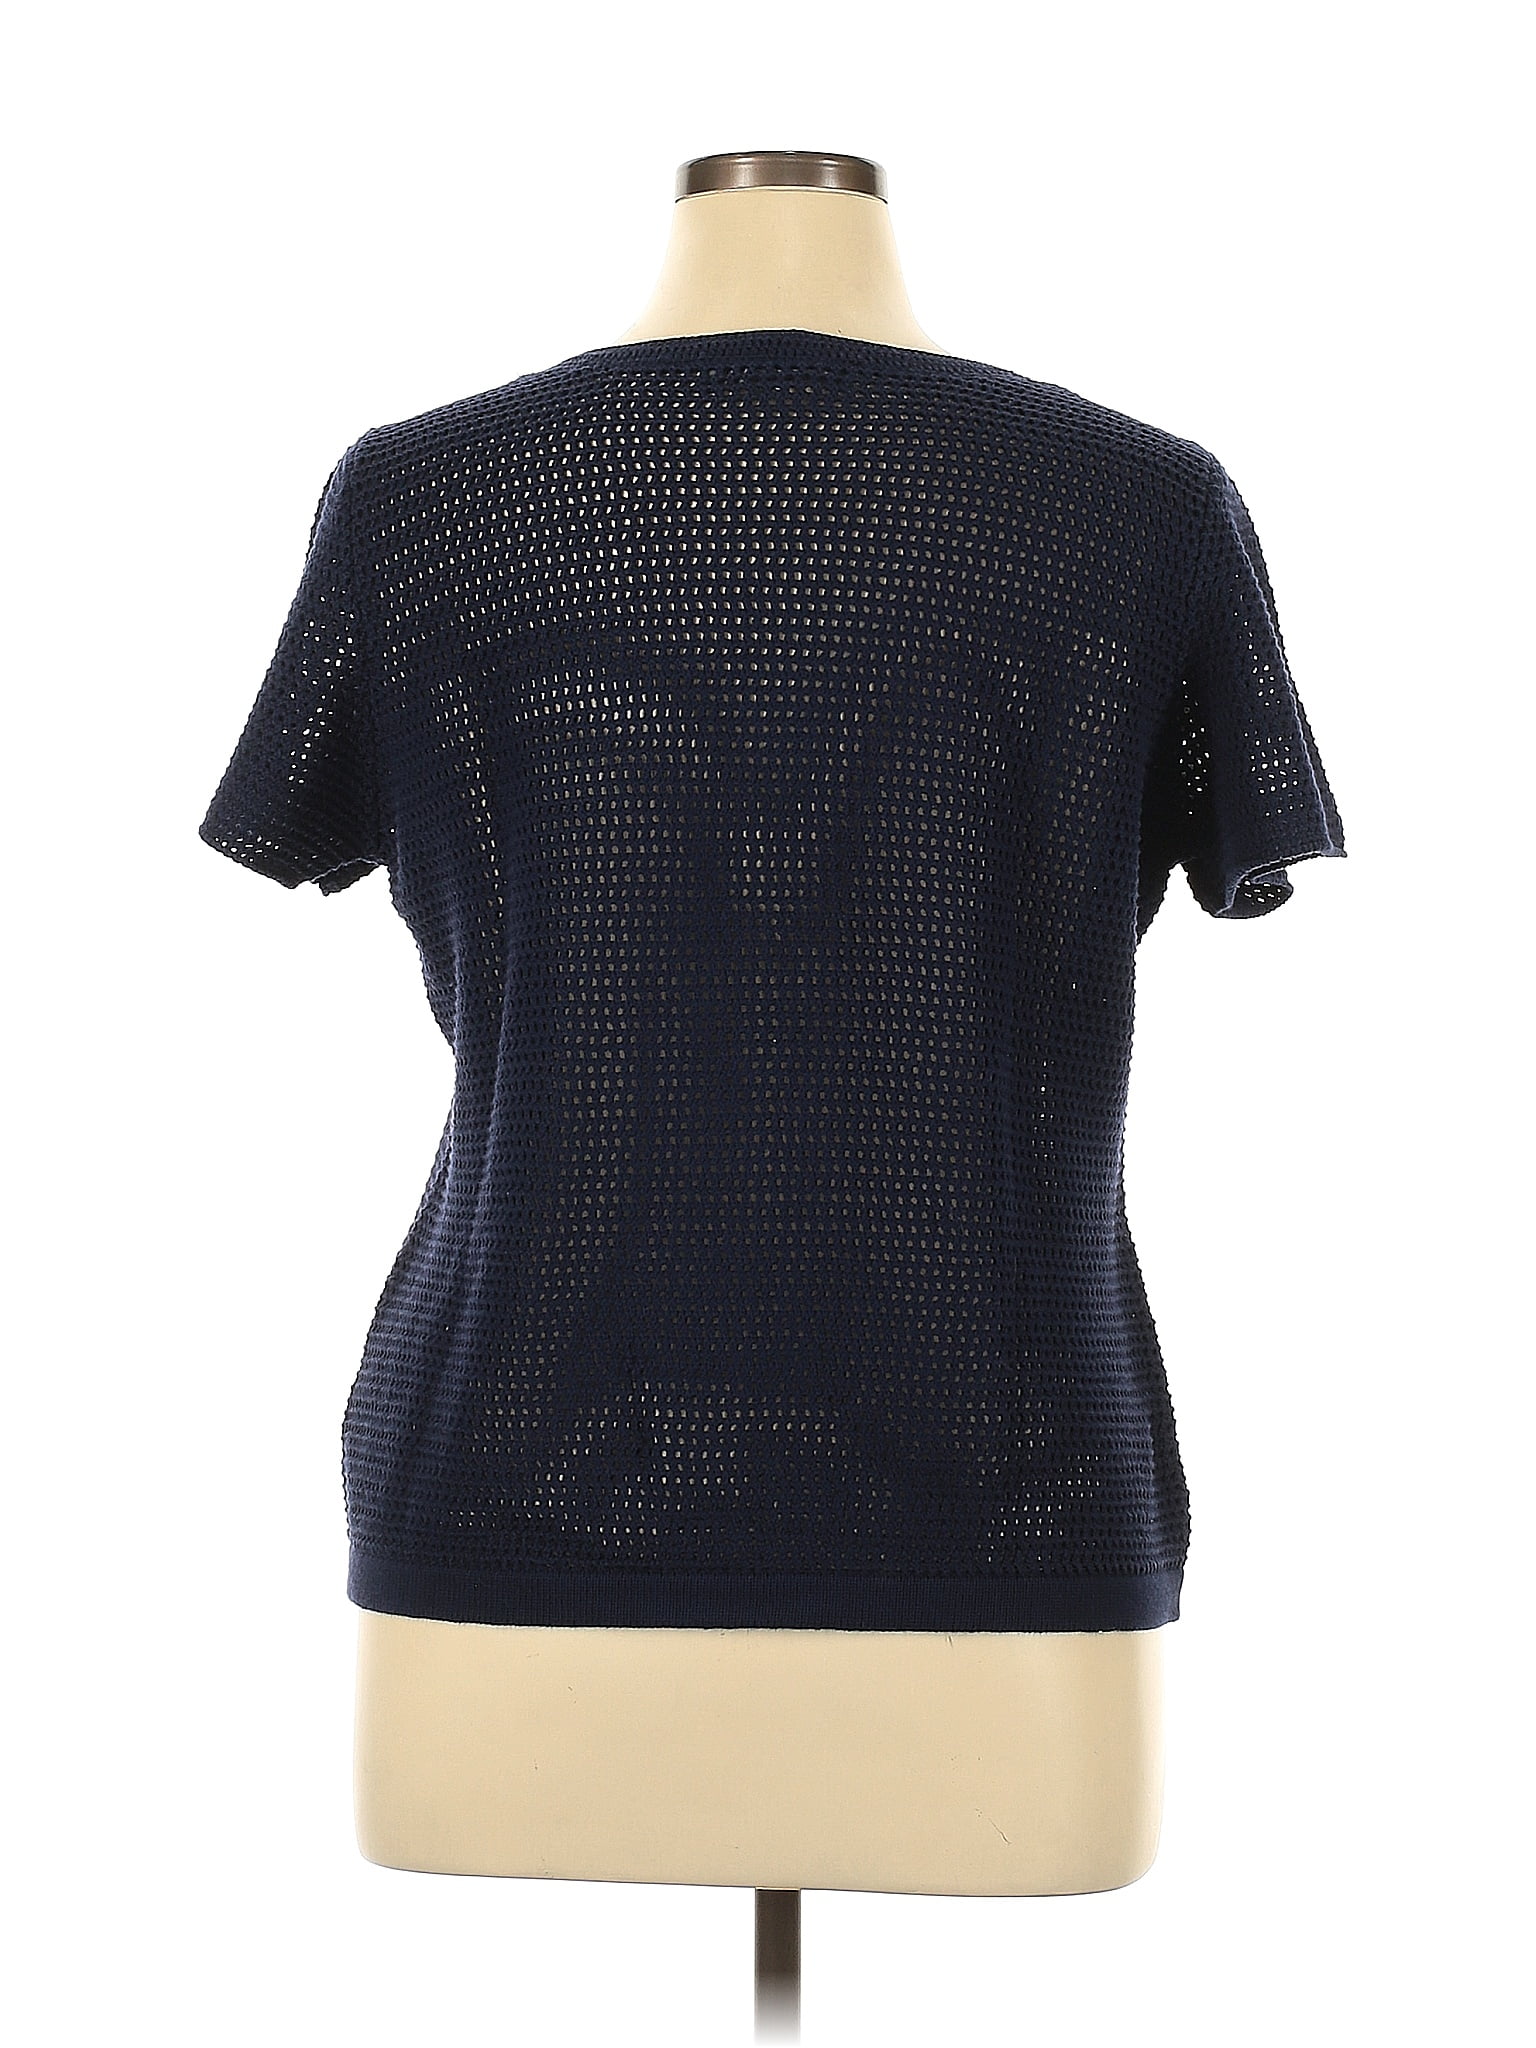 Josephine Chaus 100% Cotton Color Block Blue Cardigan Size XL - 72% off